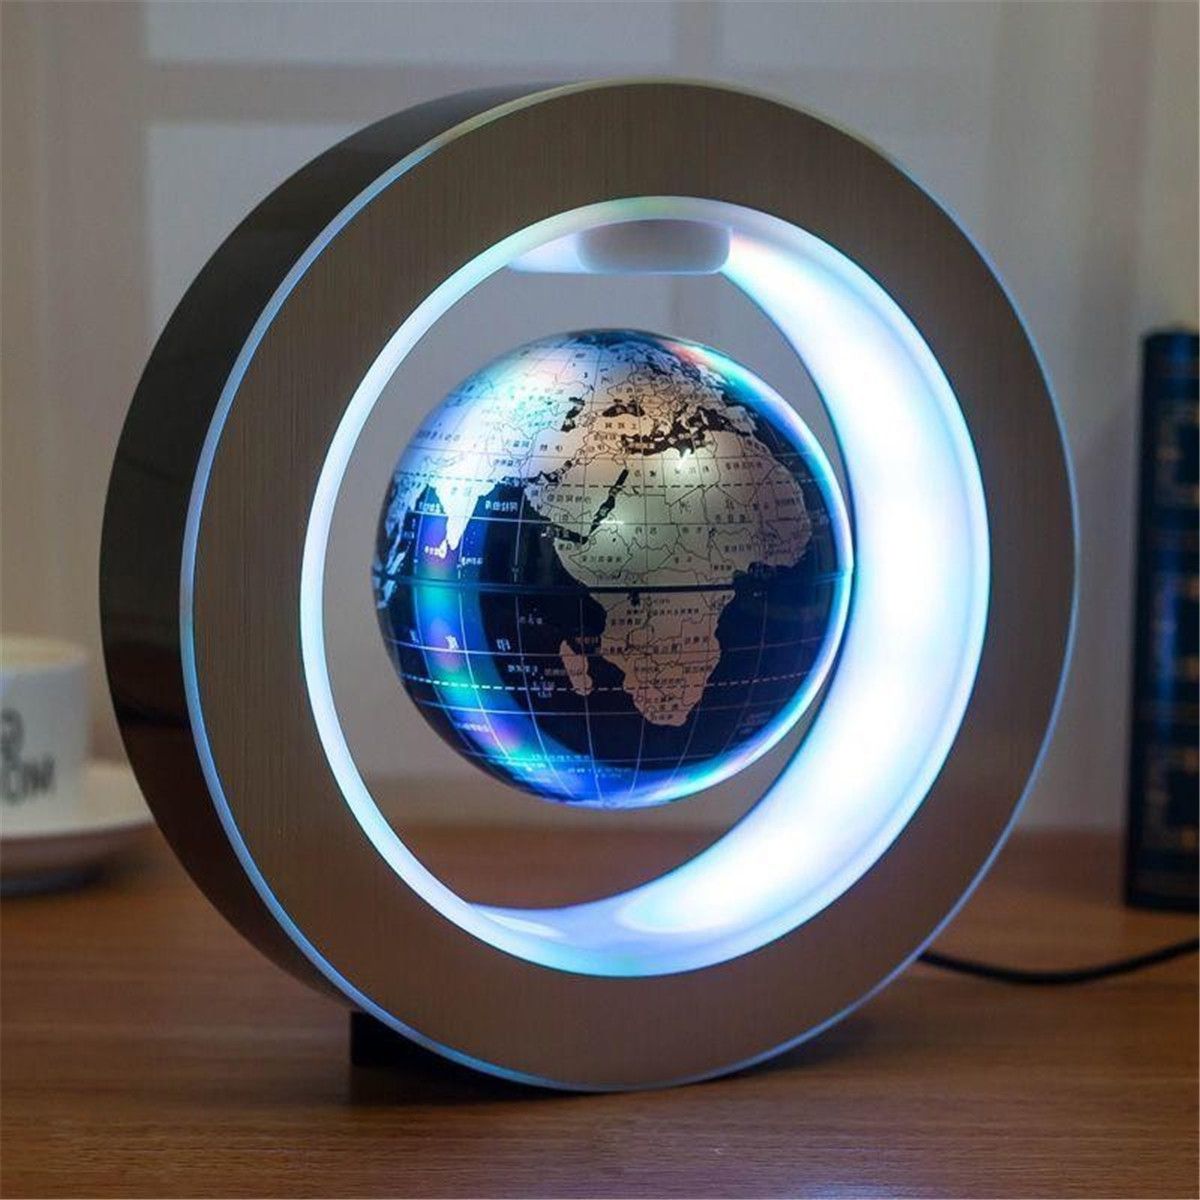 4-Inch-Magnetic-Levitation-Floating-Globe-Map-LED-Light-Home-Office-Desktop-Decor-Gift-1213325